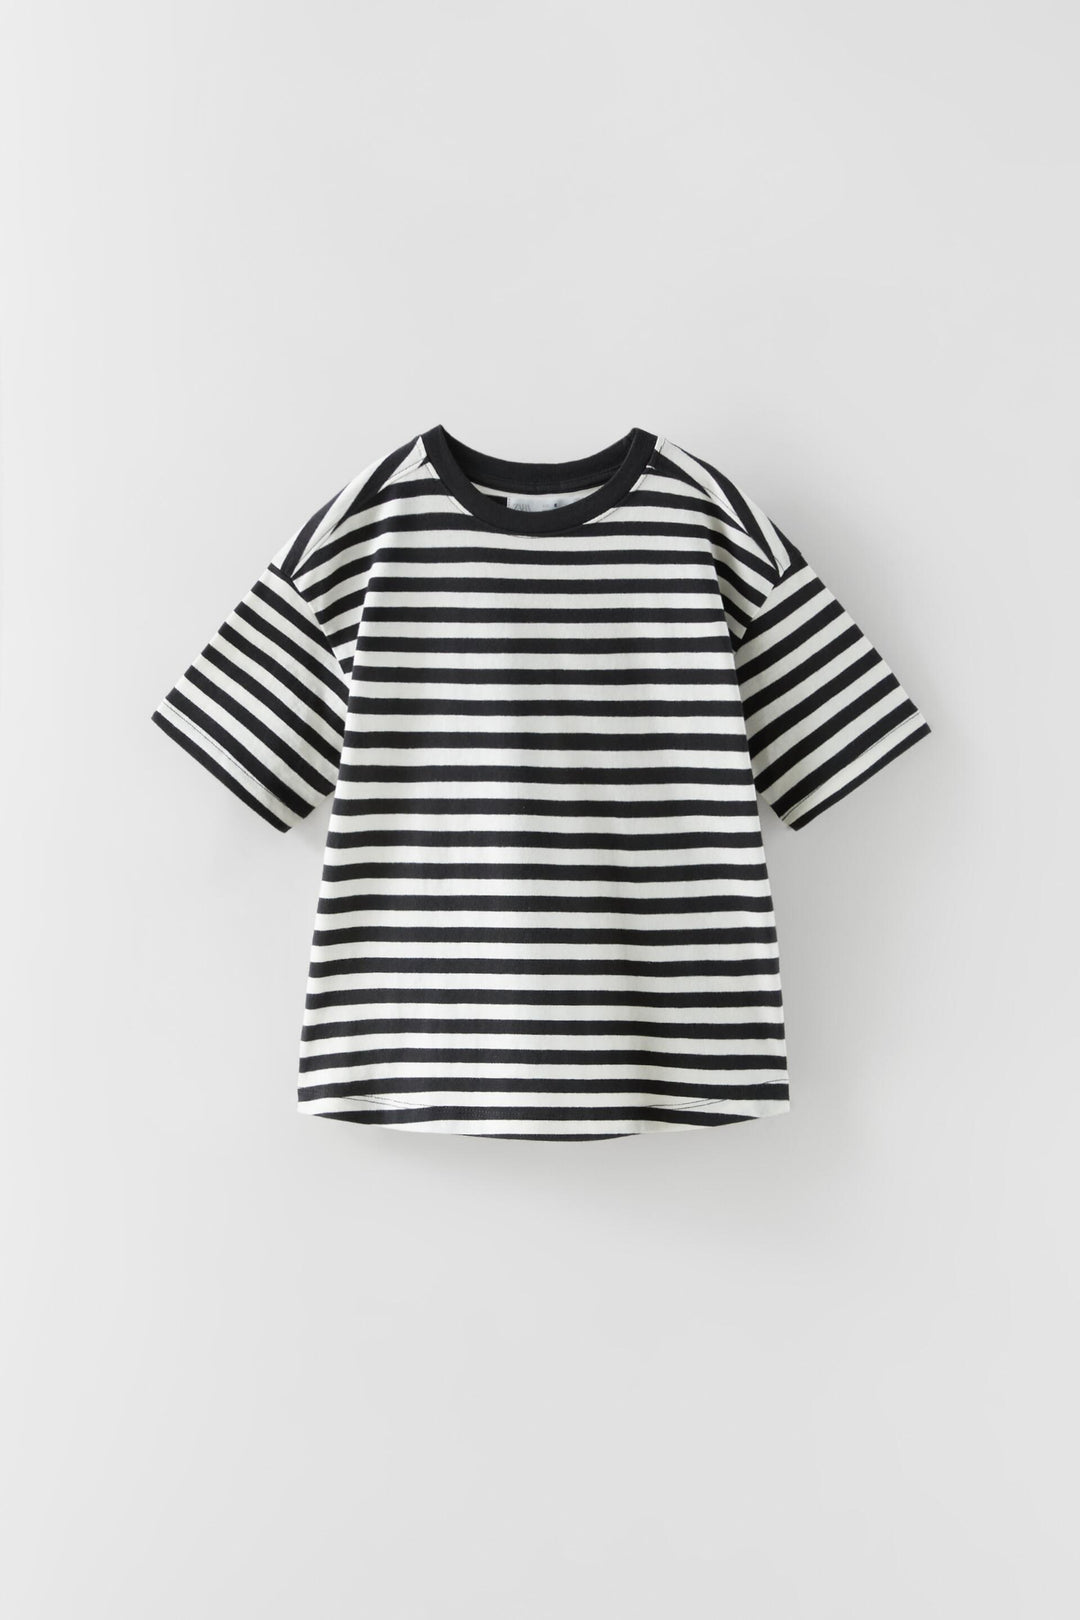 T-Shirt marque_Zara, genre_Garçon, Enfant Moudda Tunisie1